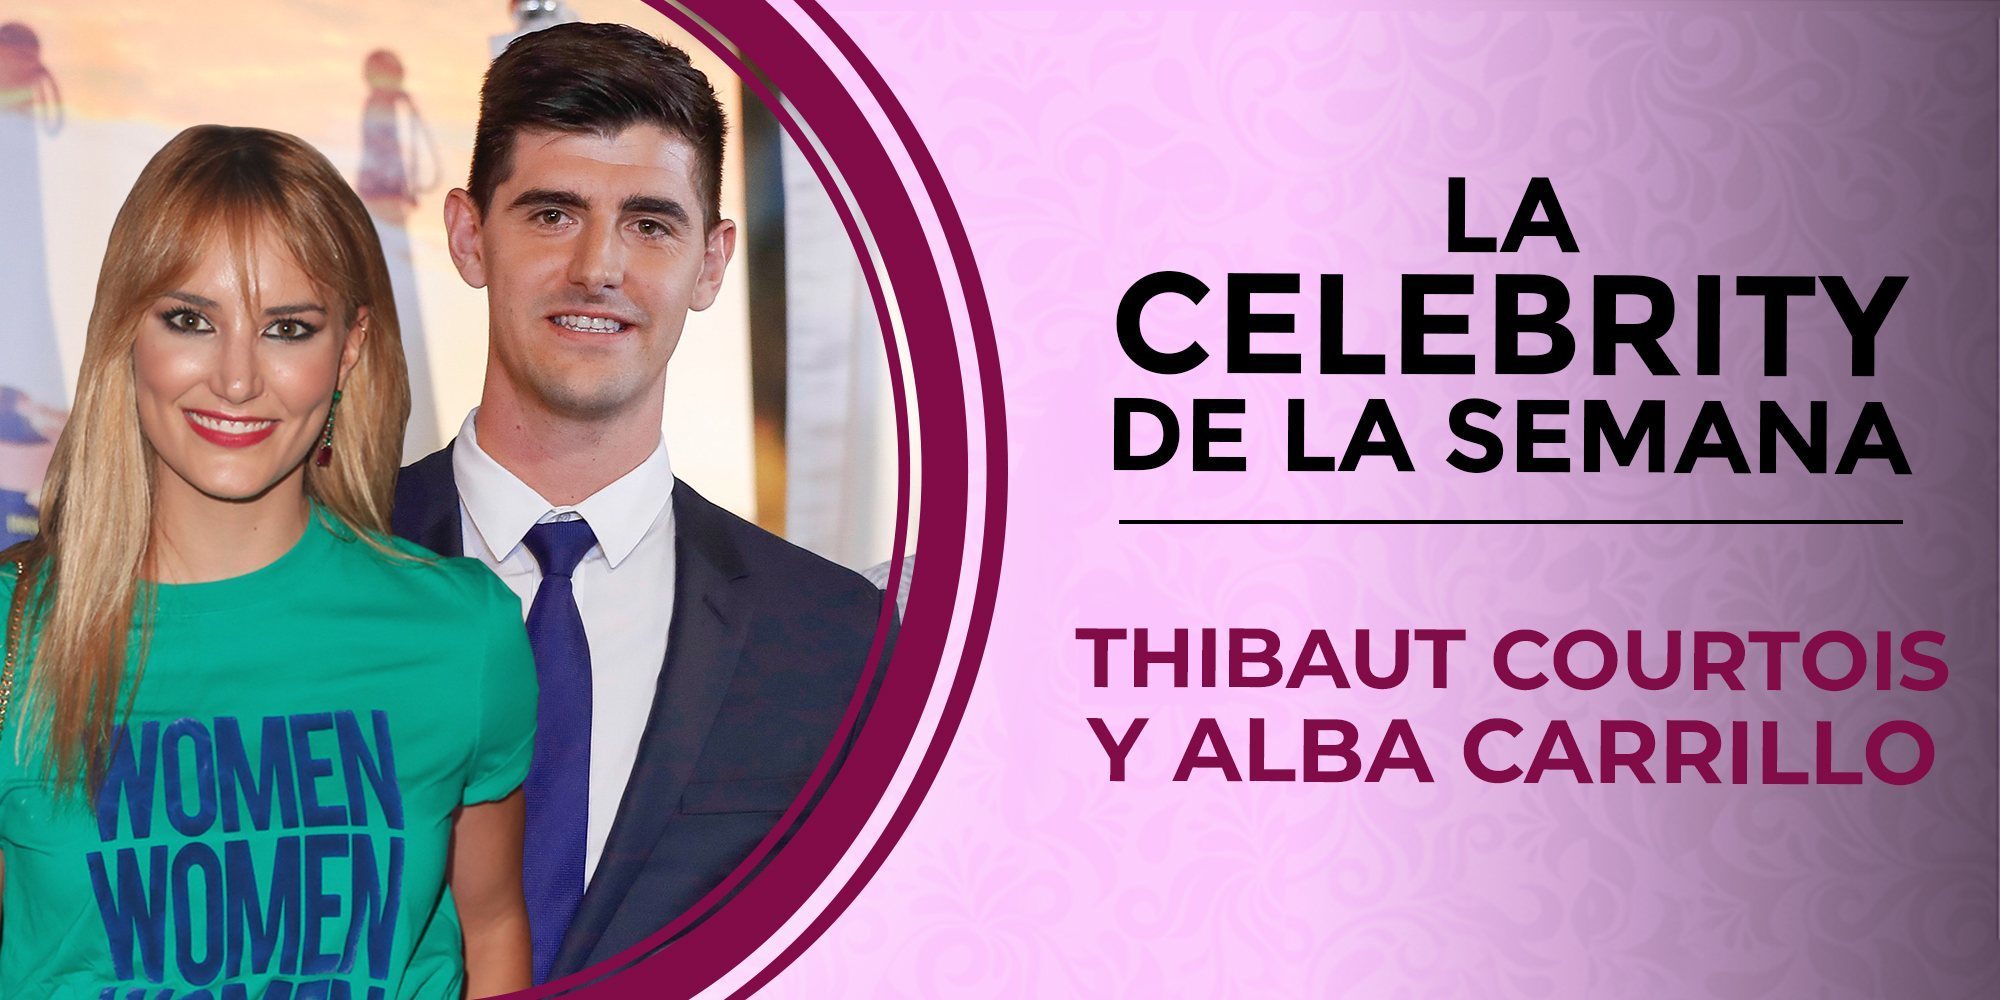 Thibaut Courtois y Alba Carrillo, celebrities de la semana por su sorprendente romance